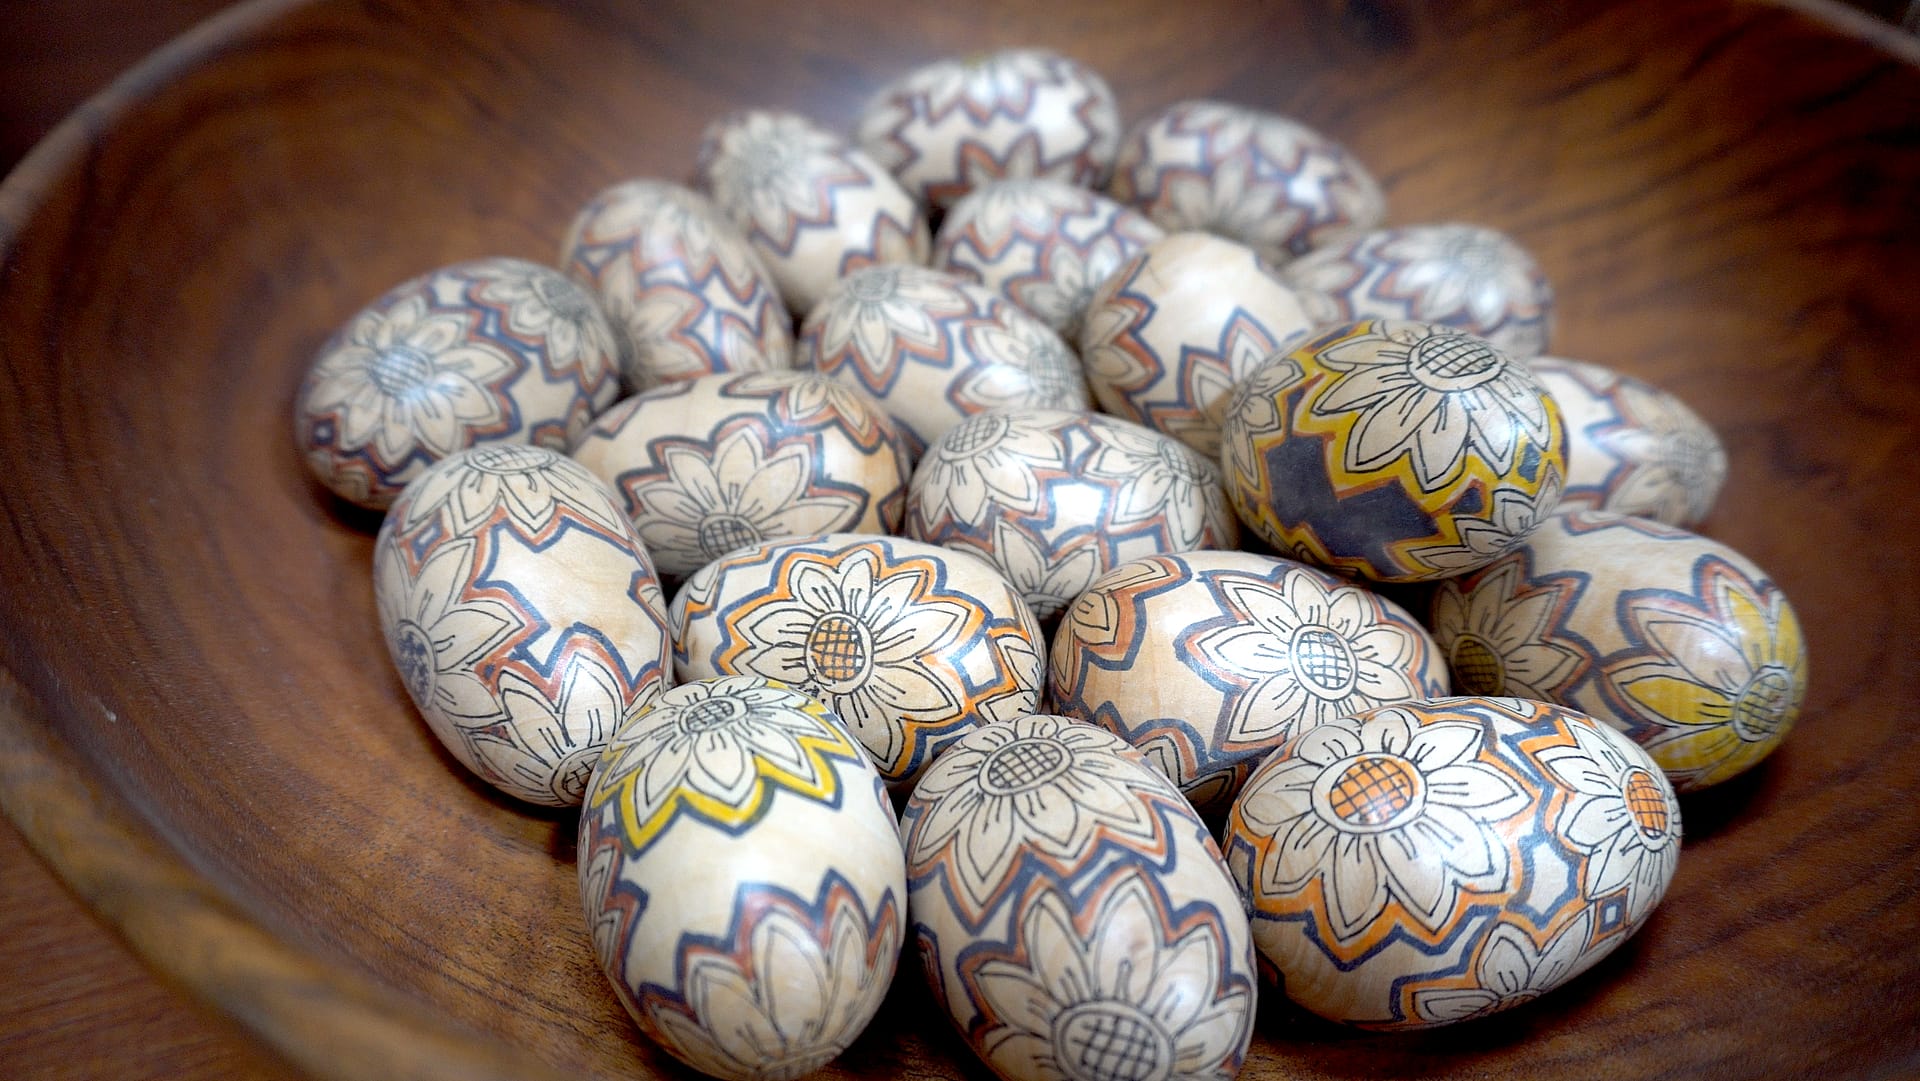 Image: Shari Kadar painted eggs in a bowl